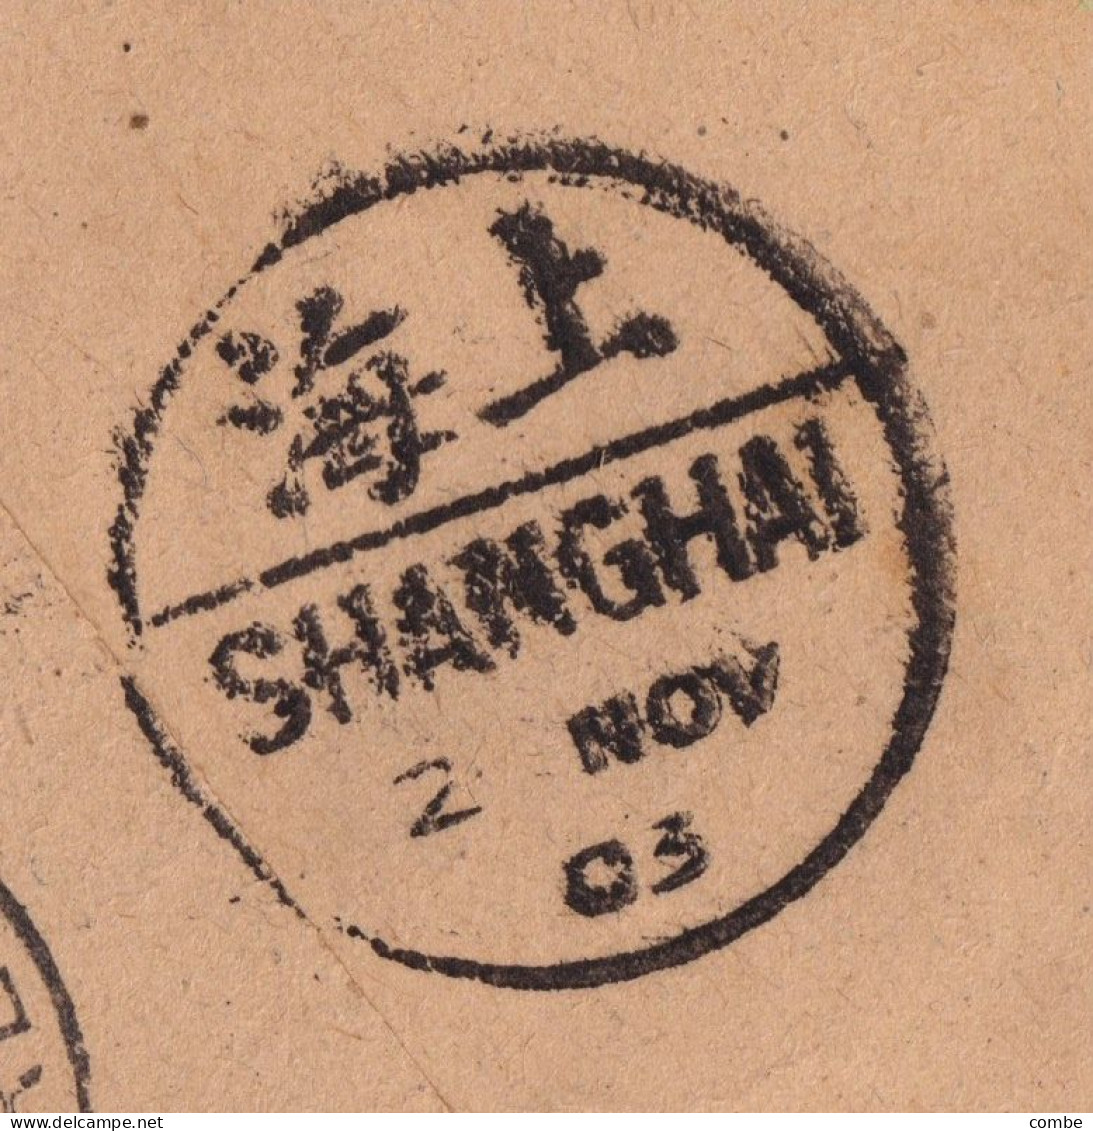 LETTRE. CHINE. COVER CHINA.1903. SHANG-HAI. DRAGON 10c X 2.  CHONGKING. POUR FRANCE - Cartas & Documentos